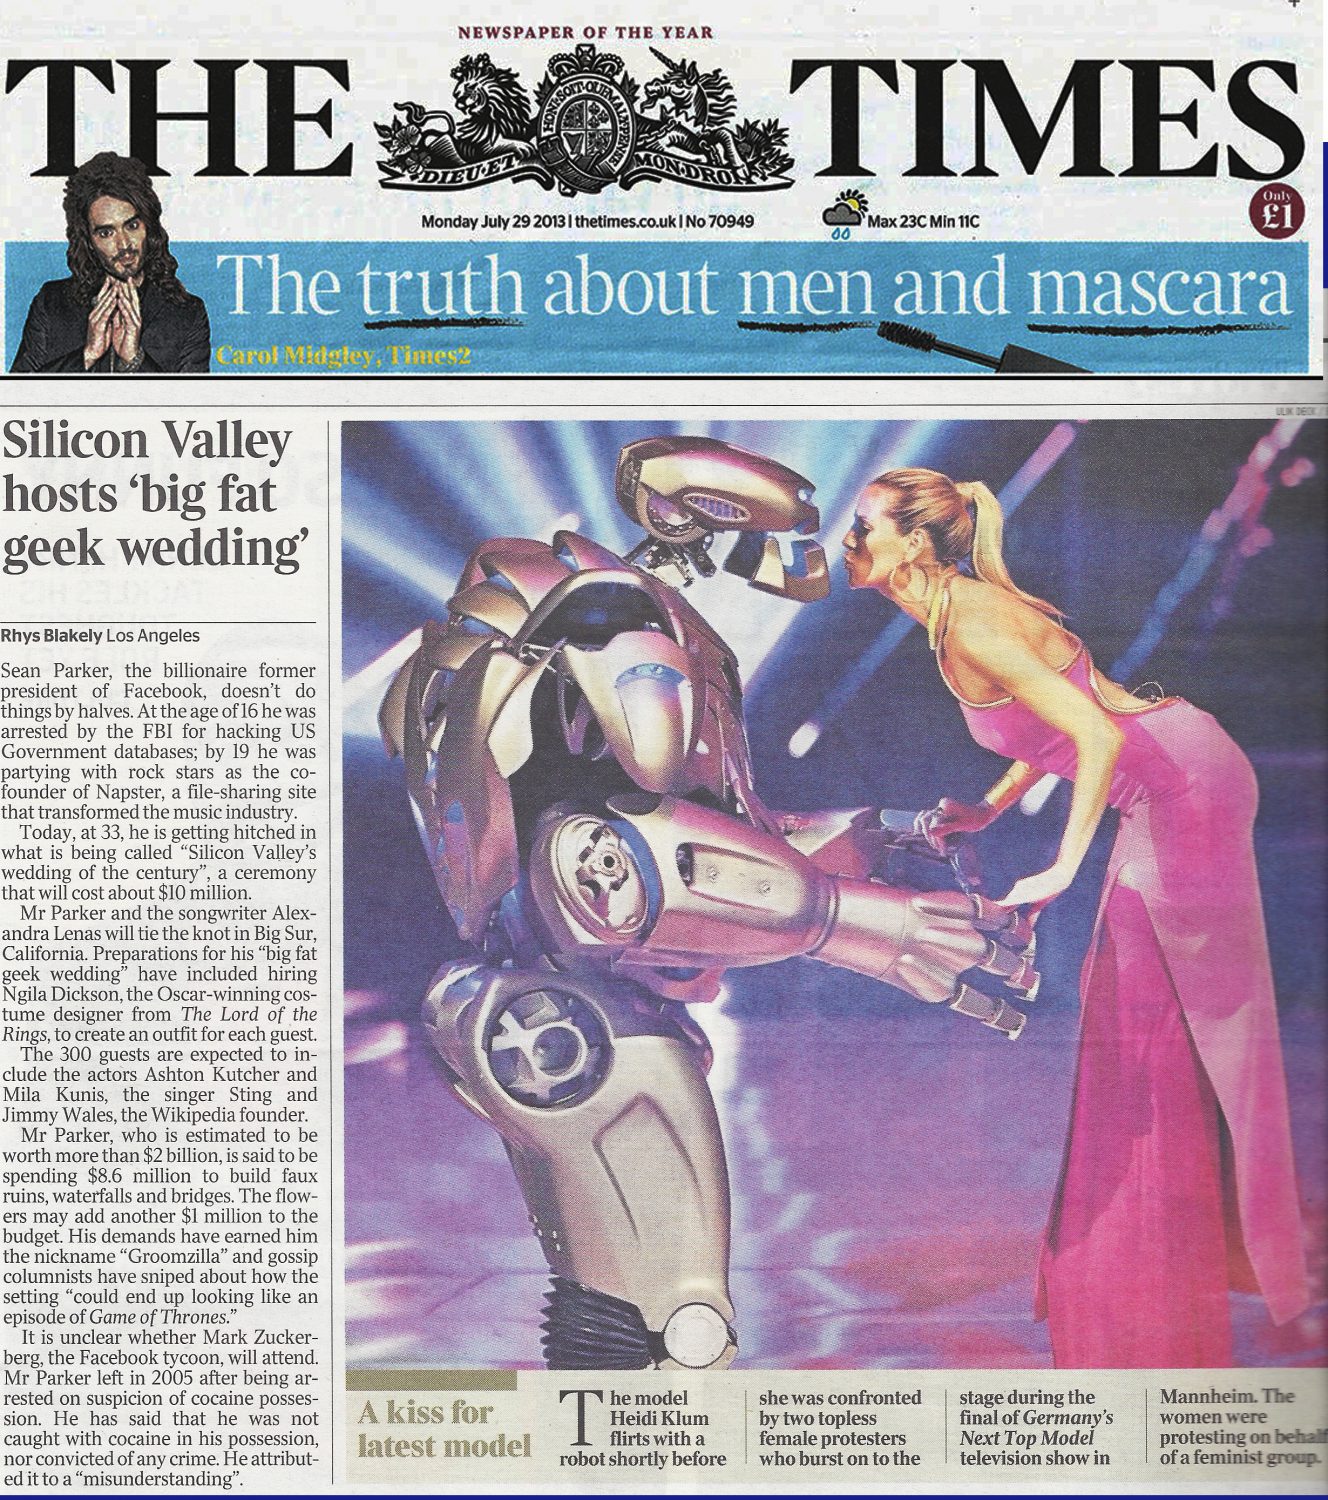 Titan the Robot kissing Heidi Klum in The Times newspaper. 